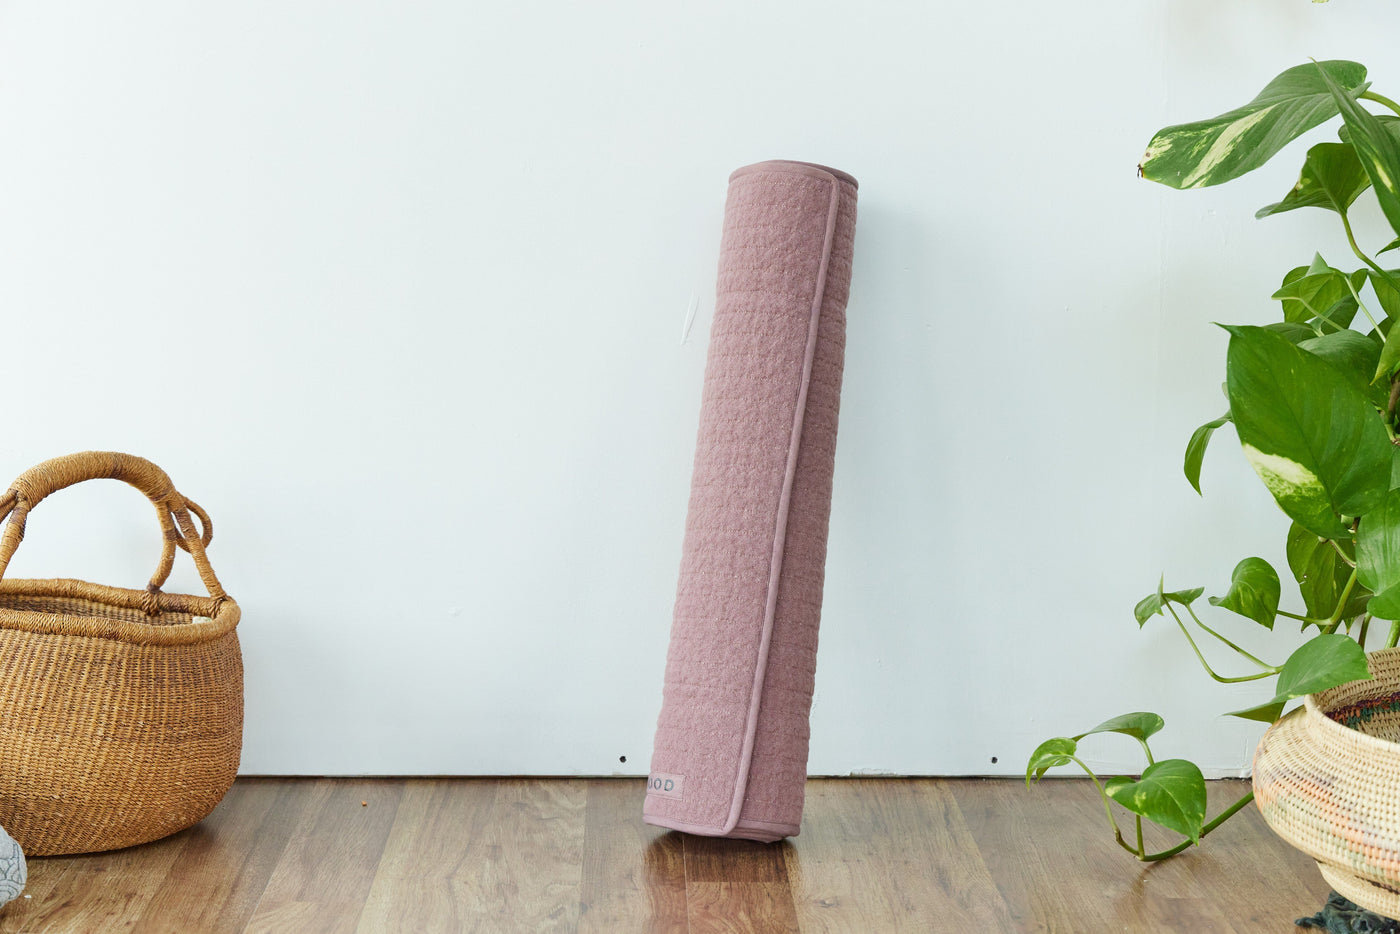  Zanti Yoga Mat Bliss - Eco Friendly Coconut Fiber